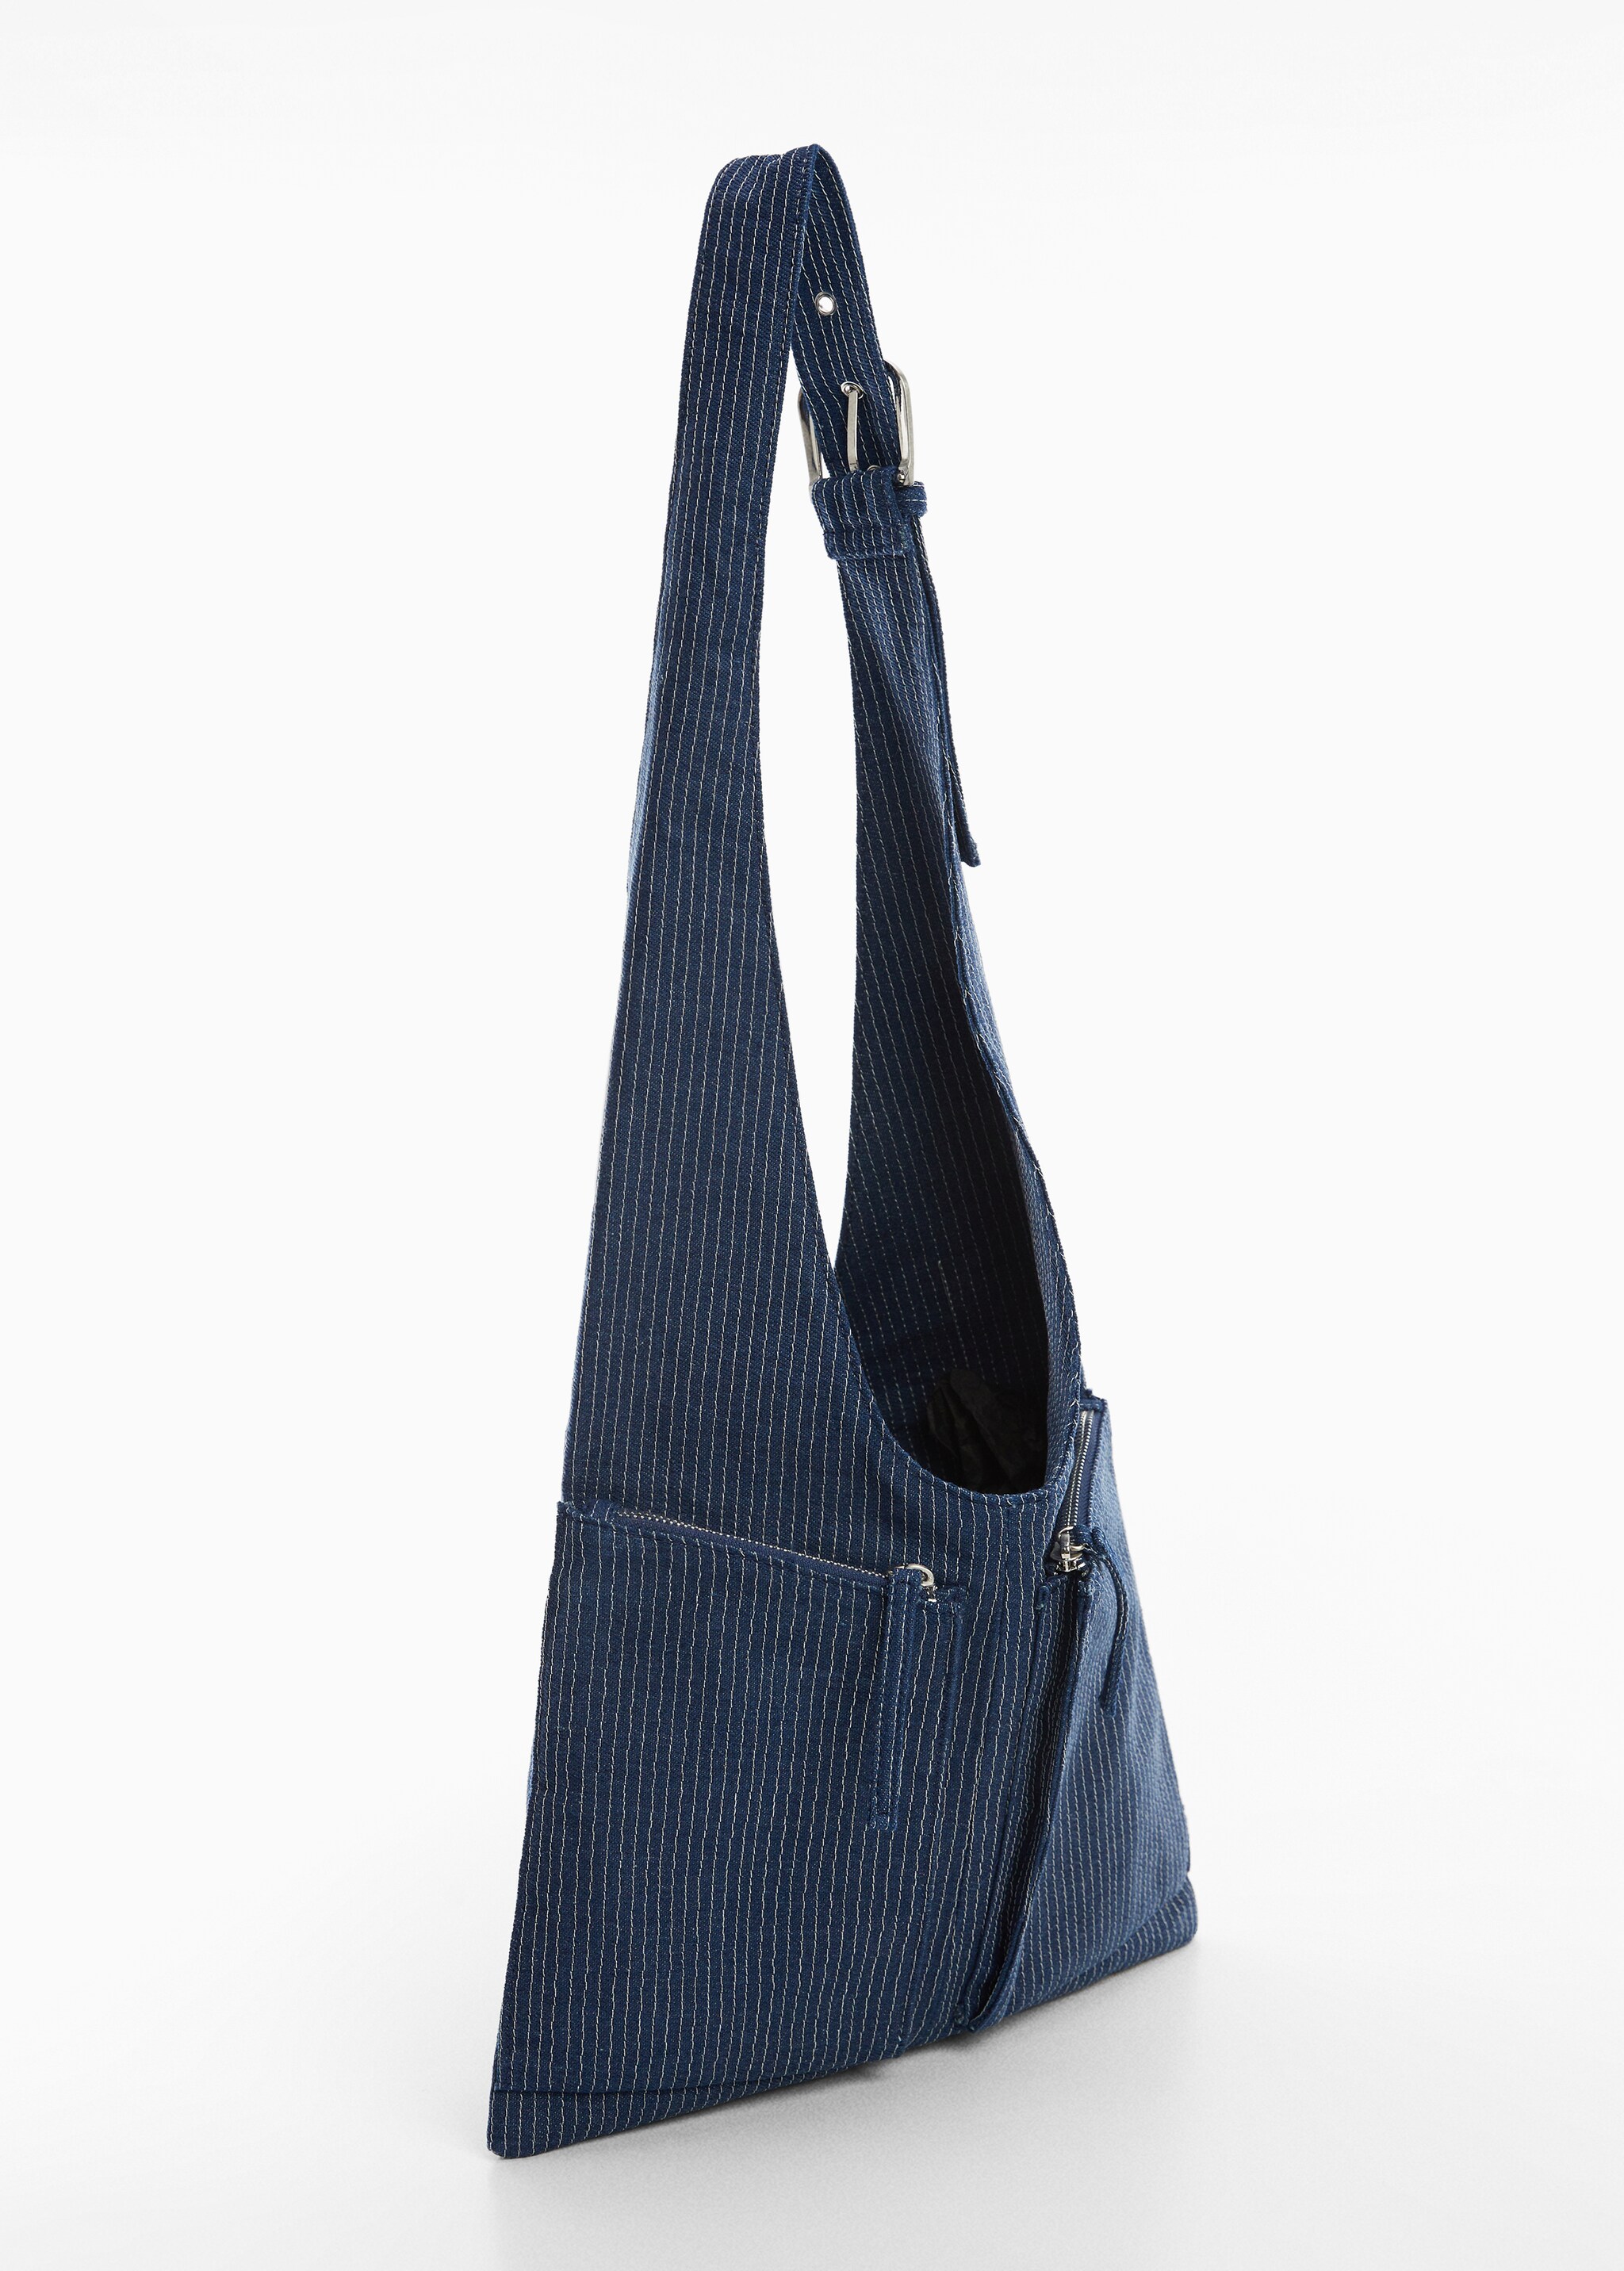 Denim bag with pockets - Medium plane